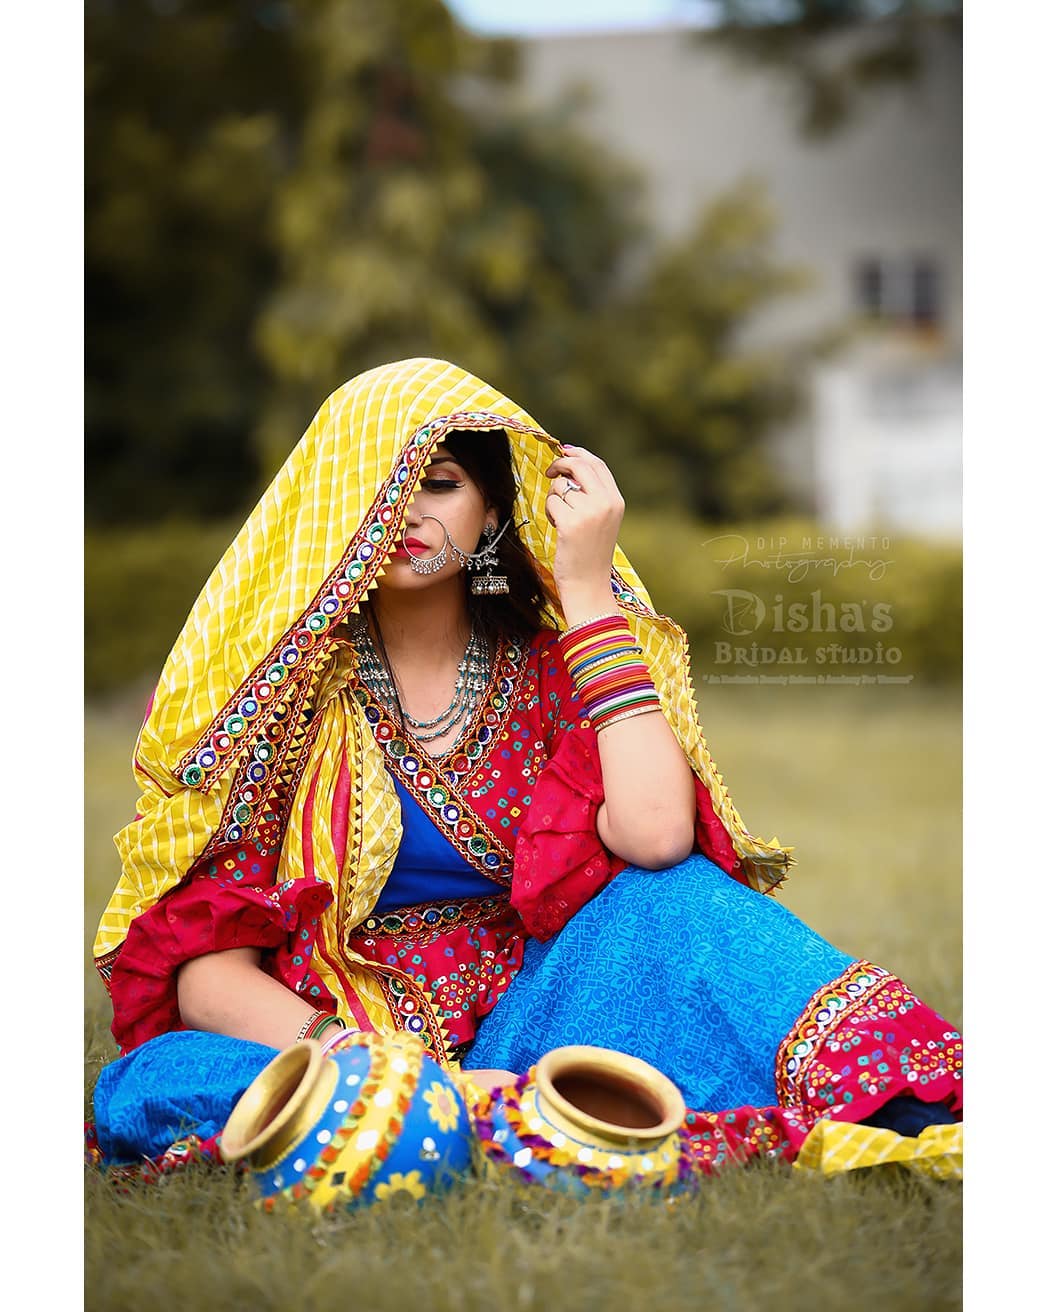 Glamour is a shooting star, it catches your eye, but fades away, beauty is the sun always brilliant day after day. 
#navratri #navratri2019 #navratri2k19
.
MUA: @dishapanchal246 
Shoot: @dip_memento_photography 
@meandmyphotography11
 InFrame: @imug_pandey 
Jewellery: @nancyhandicraft9
Costume by: @rashmithummar 
#photoshoot #ethnic #traditionalart #ahmedabad #gujarati  #rajputilook #makeup #navratrichaniyacholi #chaniyacholi #indianfashionblogger  #fashionblogger #makeuptutorial #weddingdress  #rajput #bollywood #bollywoodhotness #bollywoodactresses #indian #pic #picoftheday #photooftheday  #festivalofnations #festival